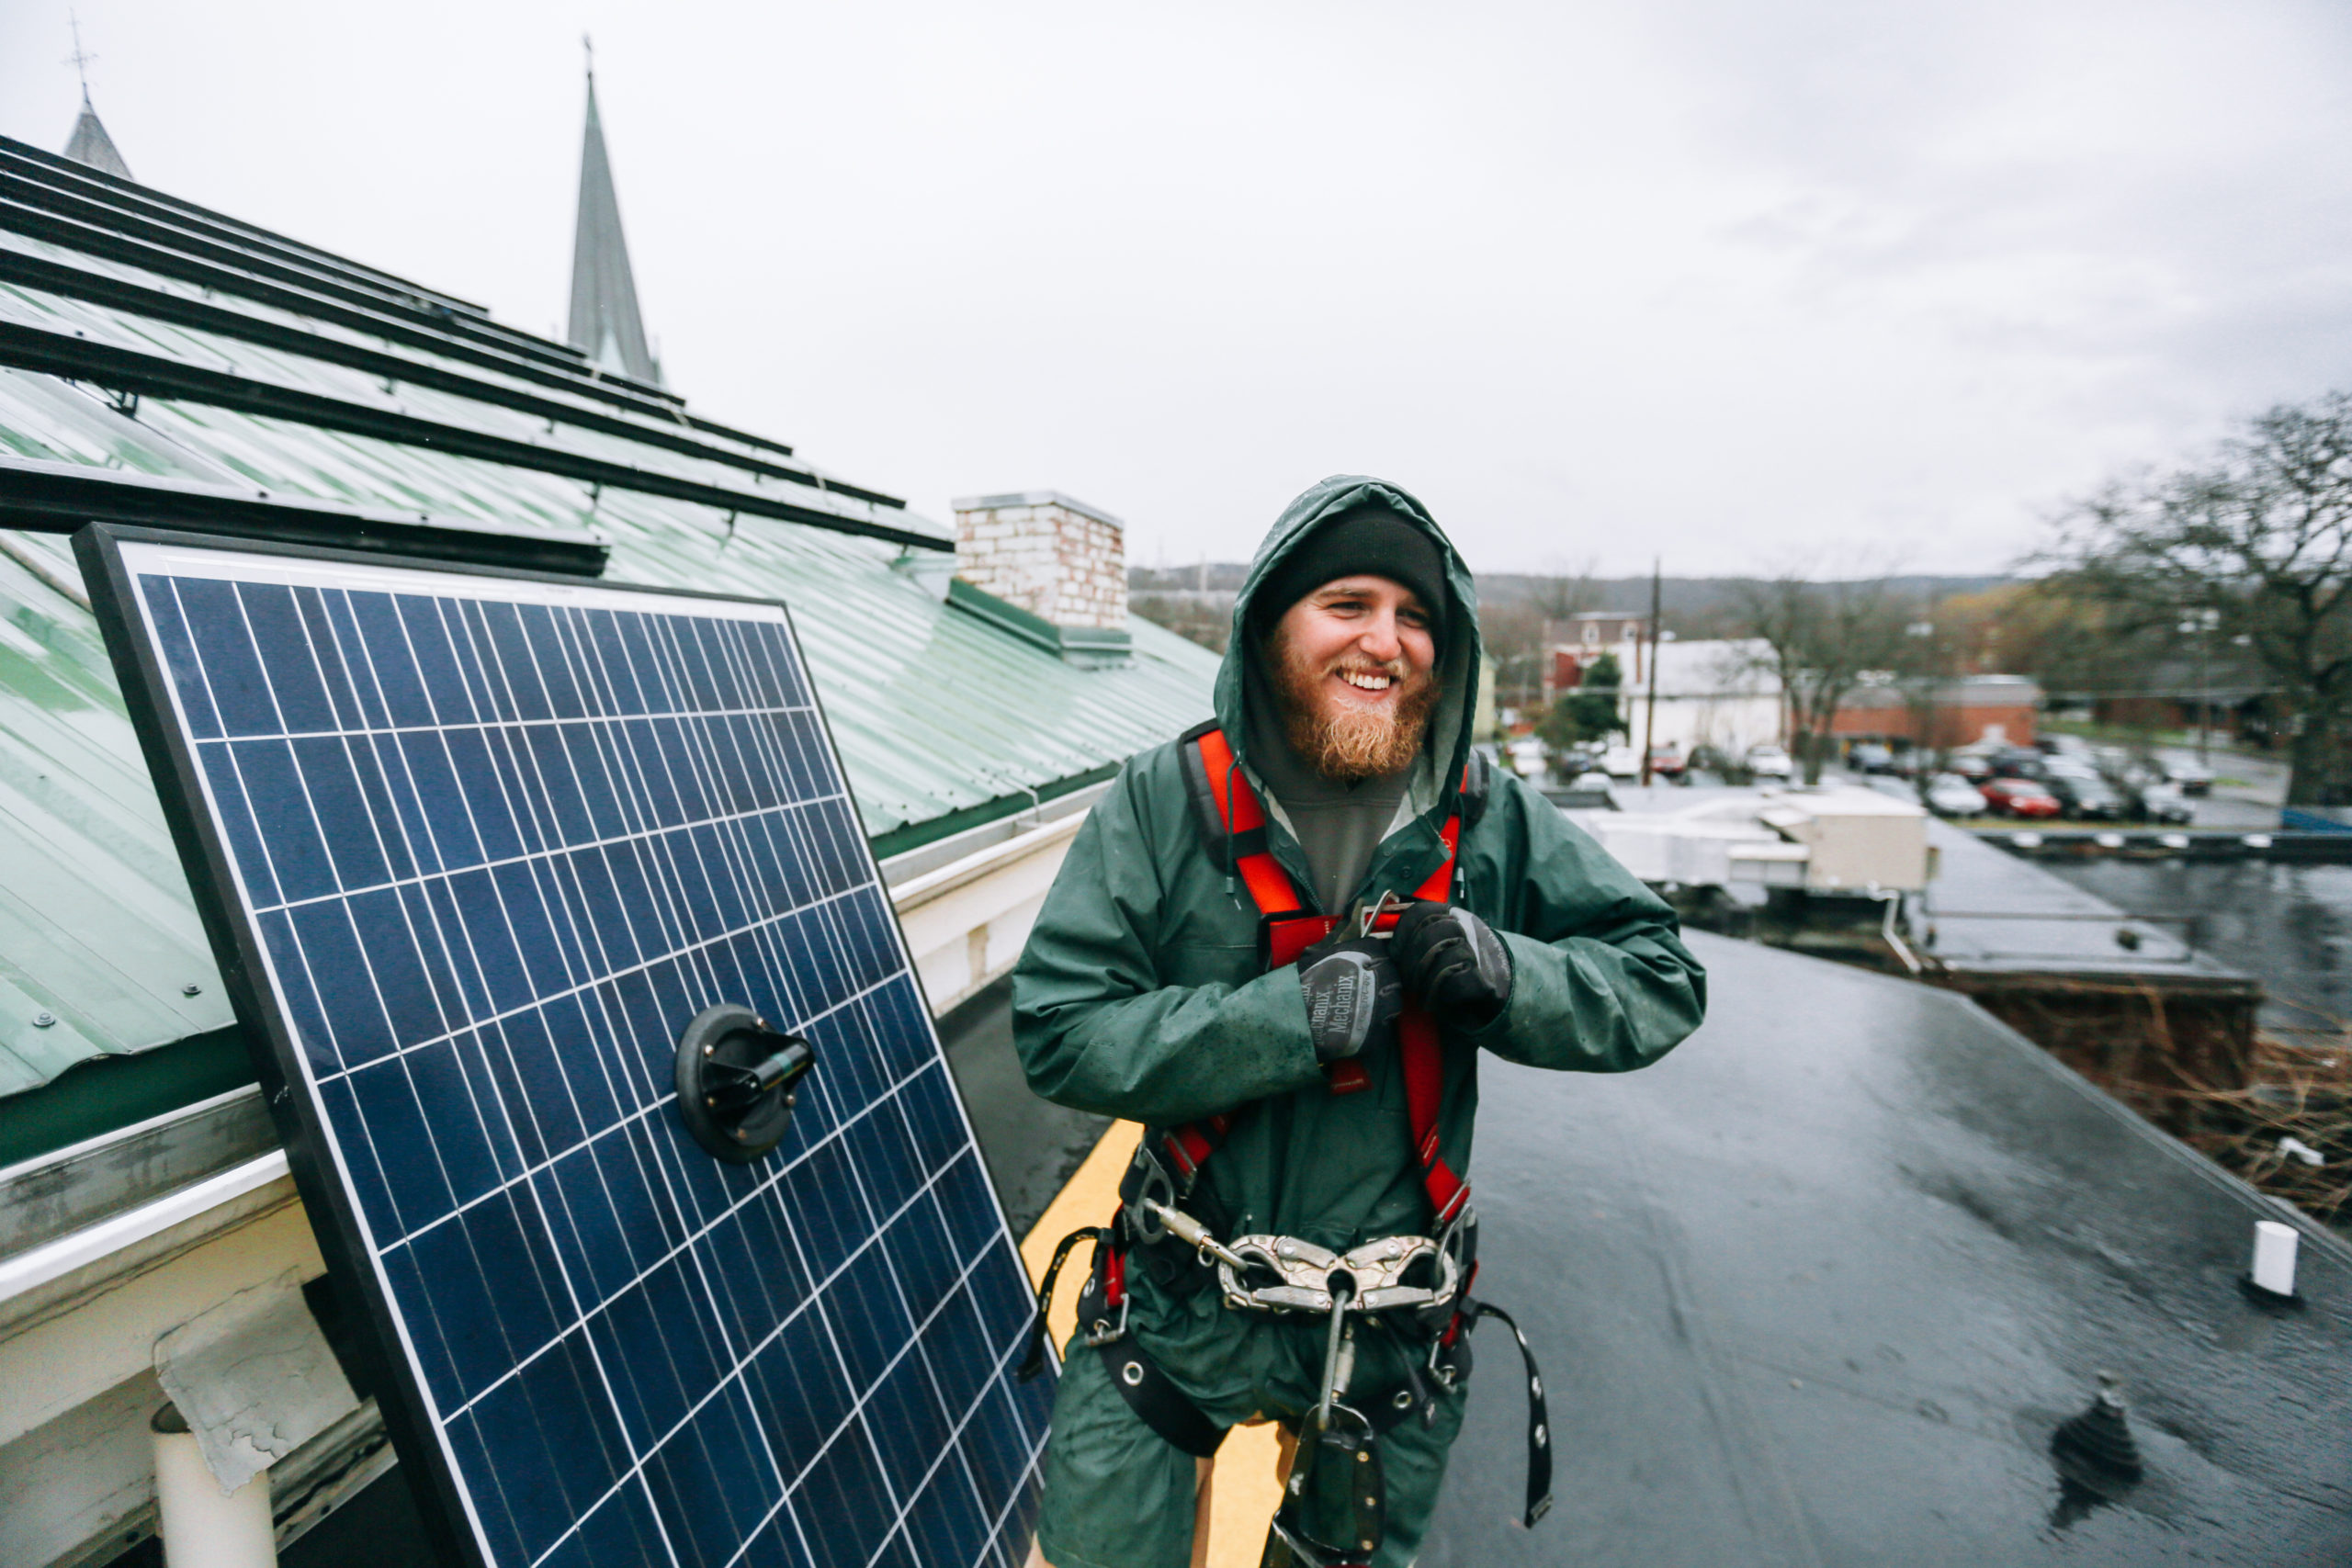 Man installing solar panels on roof